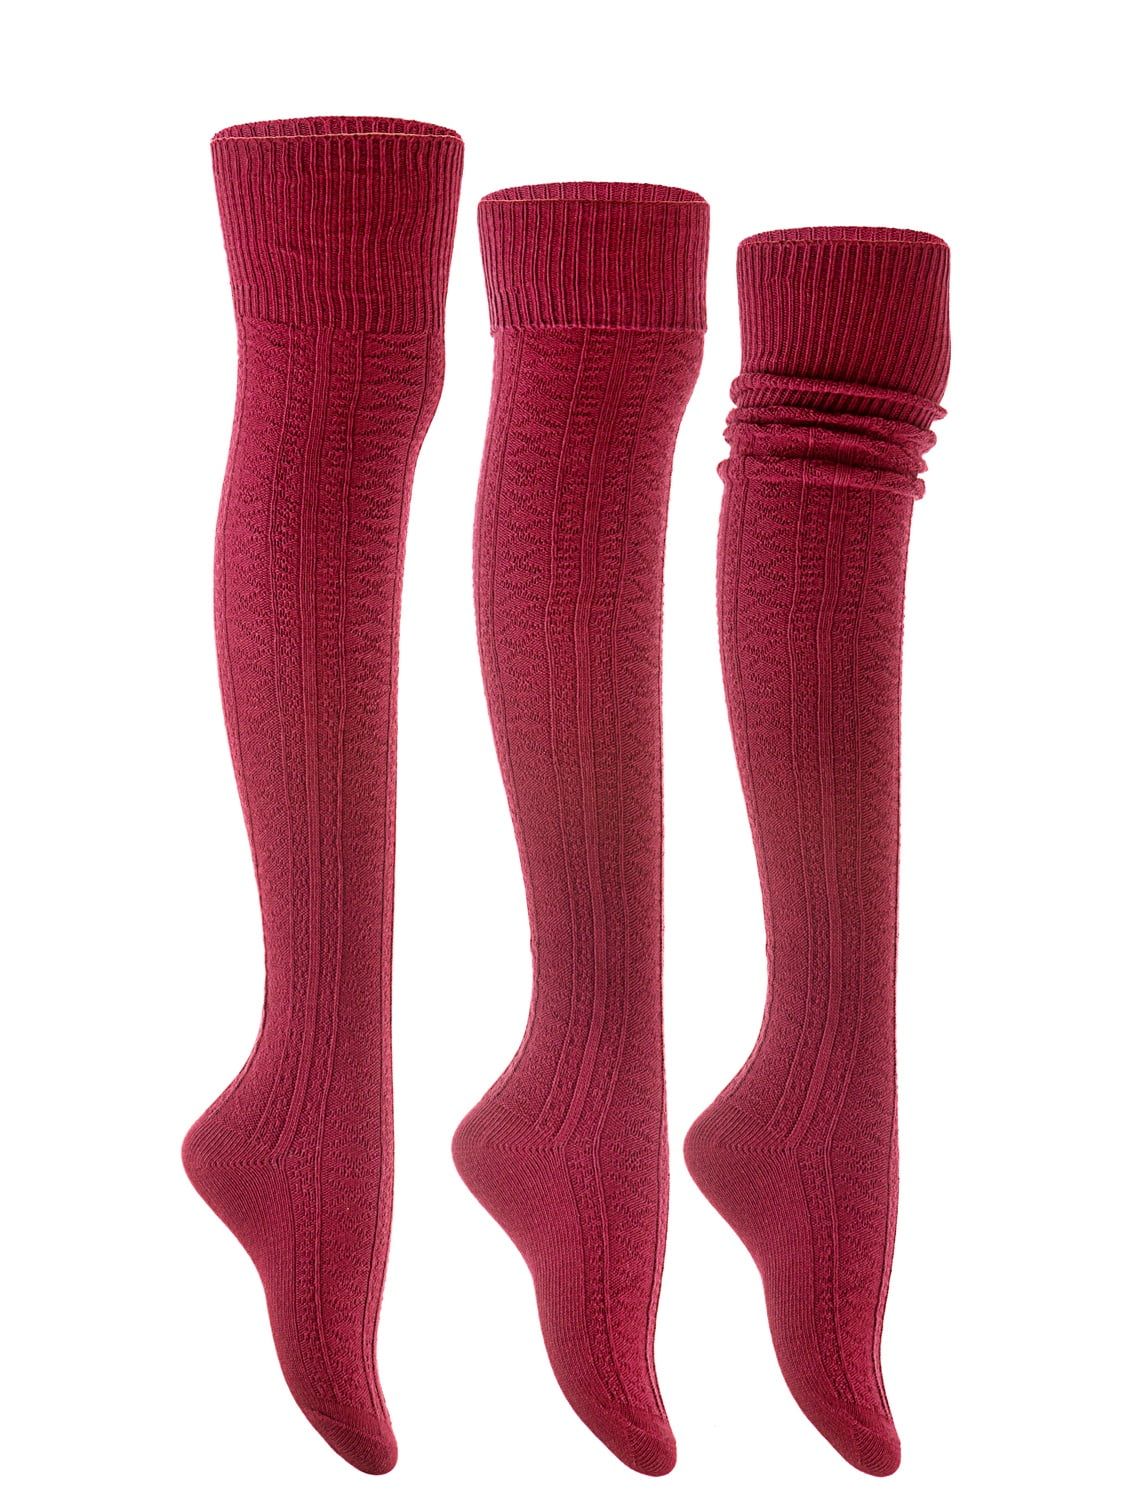 Lian LifeStyle Women's 1 Pair Fashion Thigh High Cotton Socks Size 6-9 ...